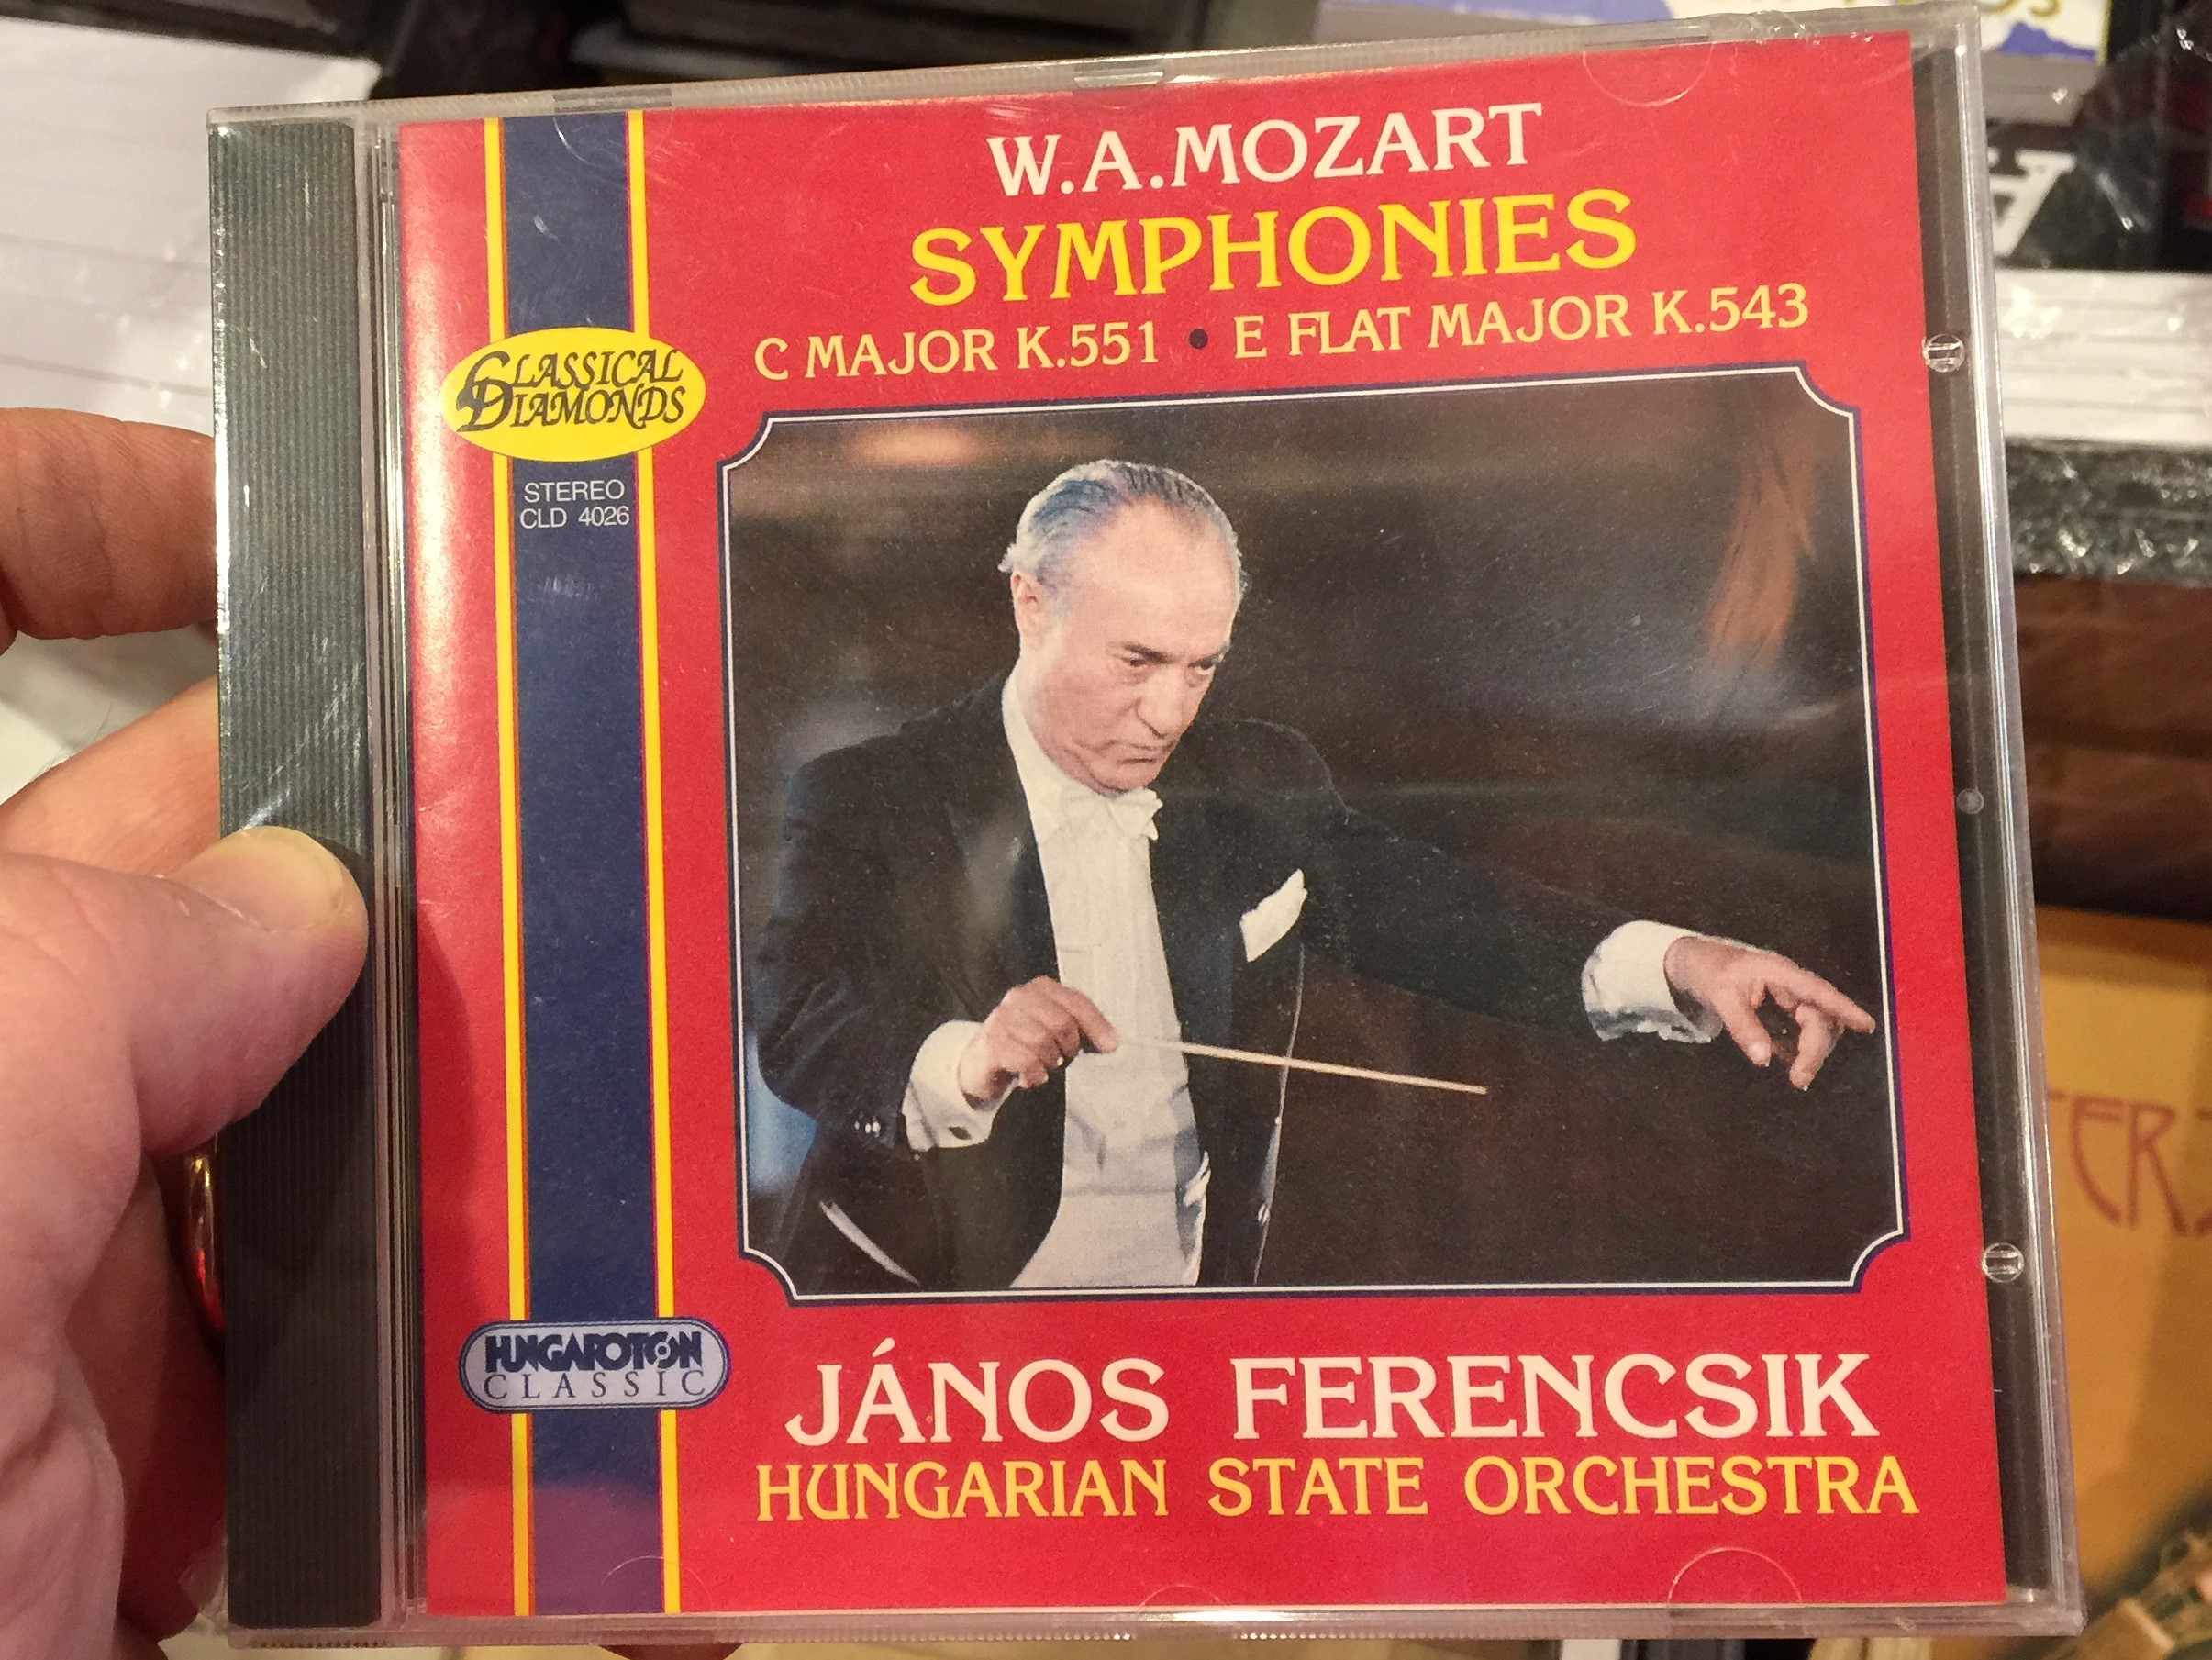 w.-a.-mozart-symphonies-c-major-k.-551-e-flat-major-k.-543-janos-ferencsik-hungarian-state-orchestra-hungaroton-classic-audio-cd-1997-stereo-cld-4026-1-.jpg